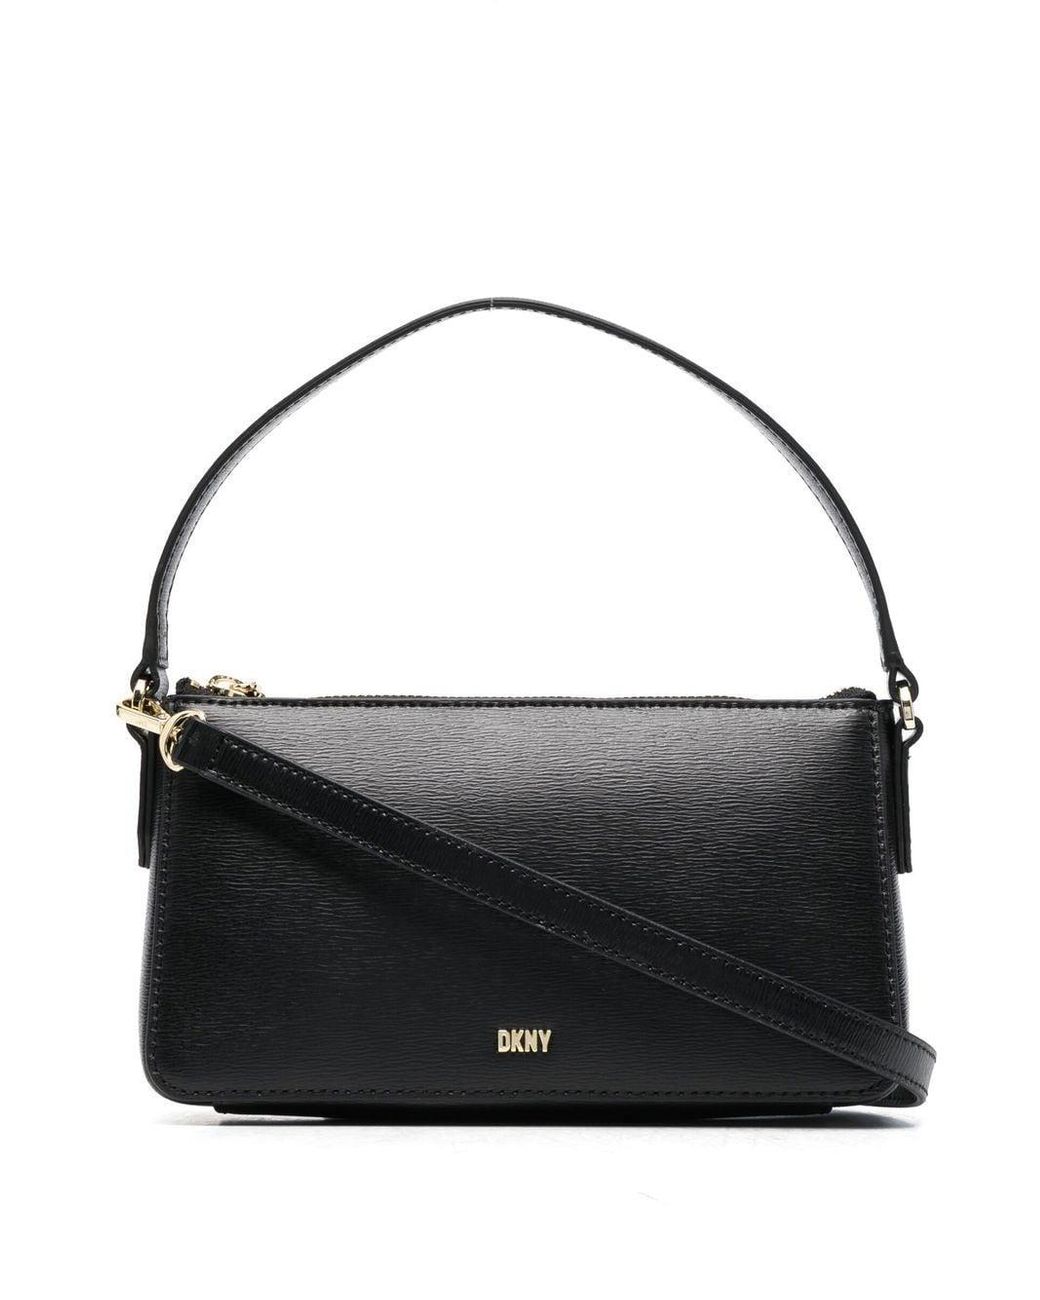 DKNY Irina Leather Crossbody Bag in Black | Lyst